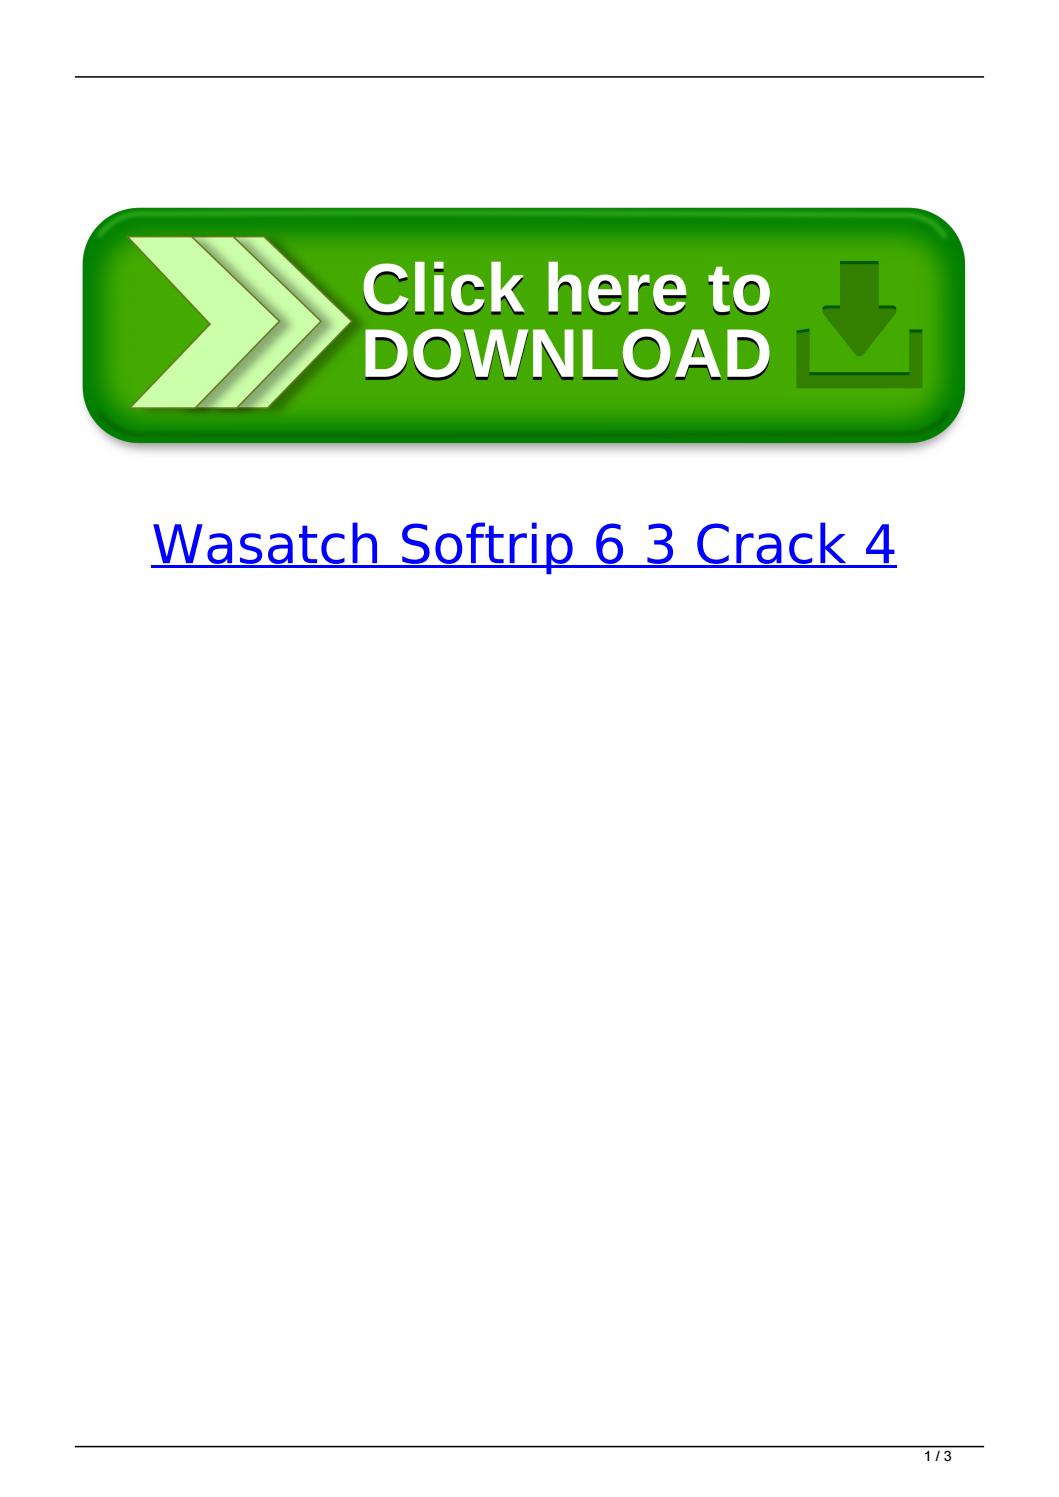 Wasatch Softrip Crack